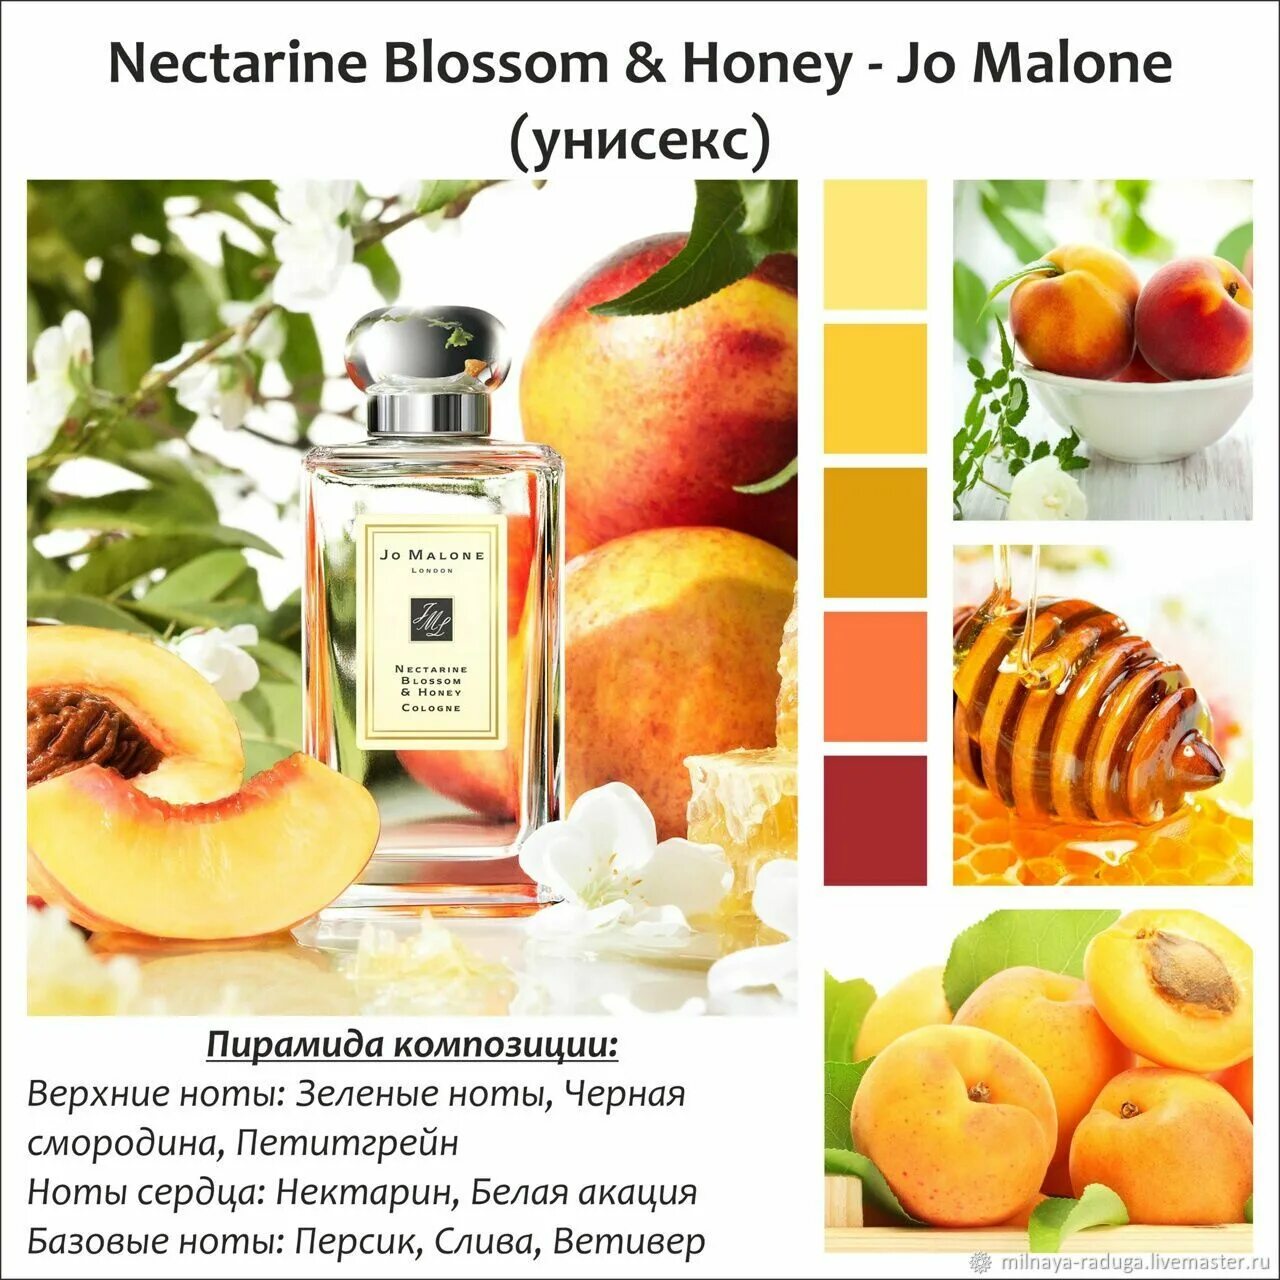 Nectarine blossom honey. Nectarine Blossom Honey Cologne. Джо Малон нектарин. Джо Малон нектарин и мед. Джо Малон блоссом Хоней.